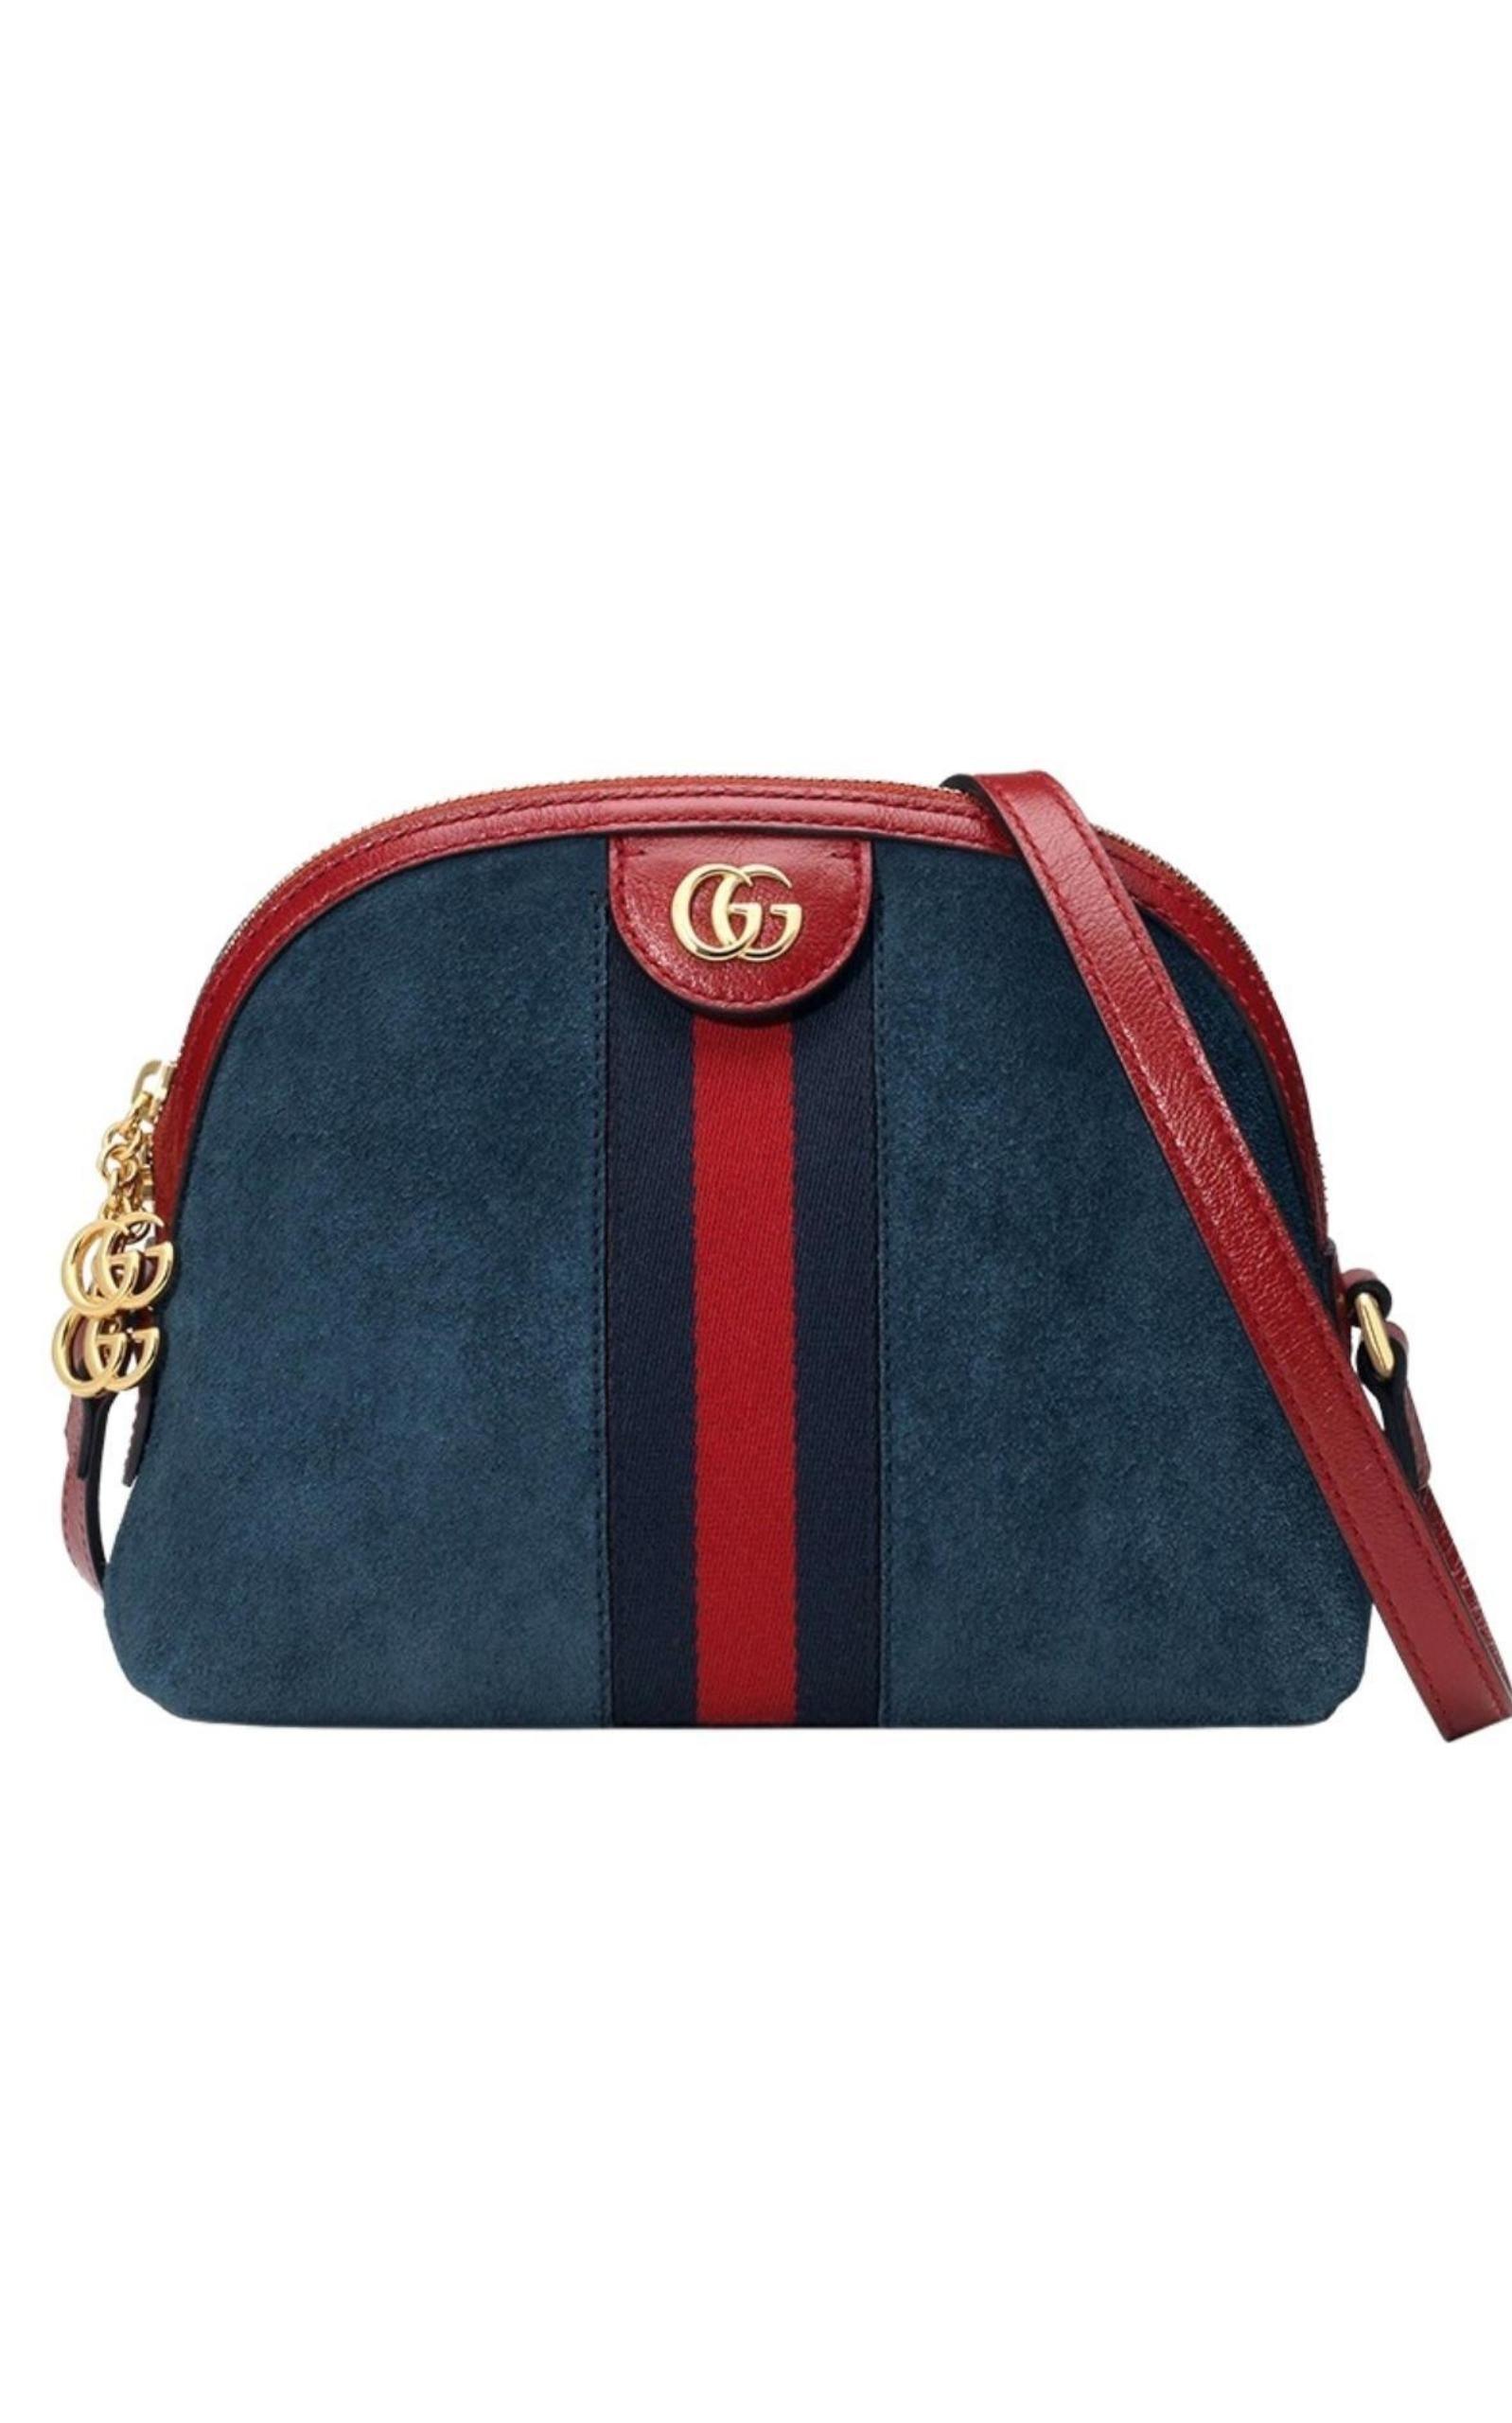 Gucci Ophidia Bag  Gucci vintage bag, Gucci ophidia bag, Gucci